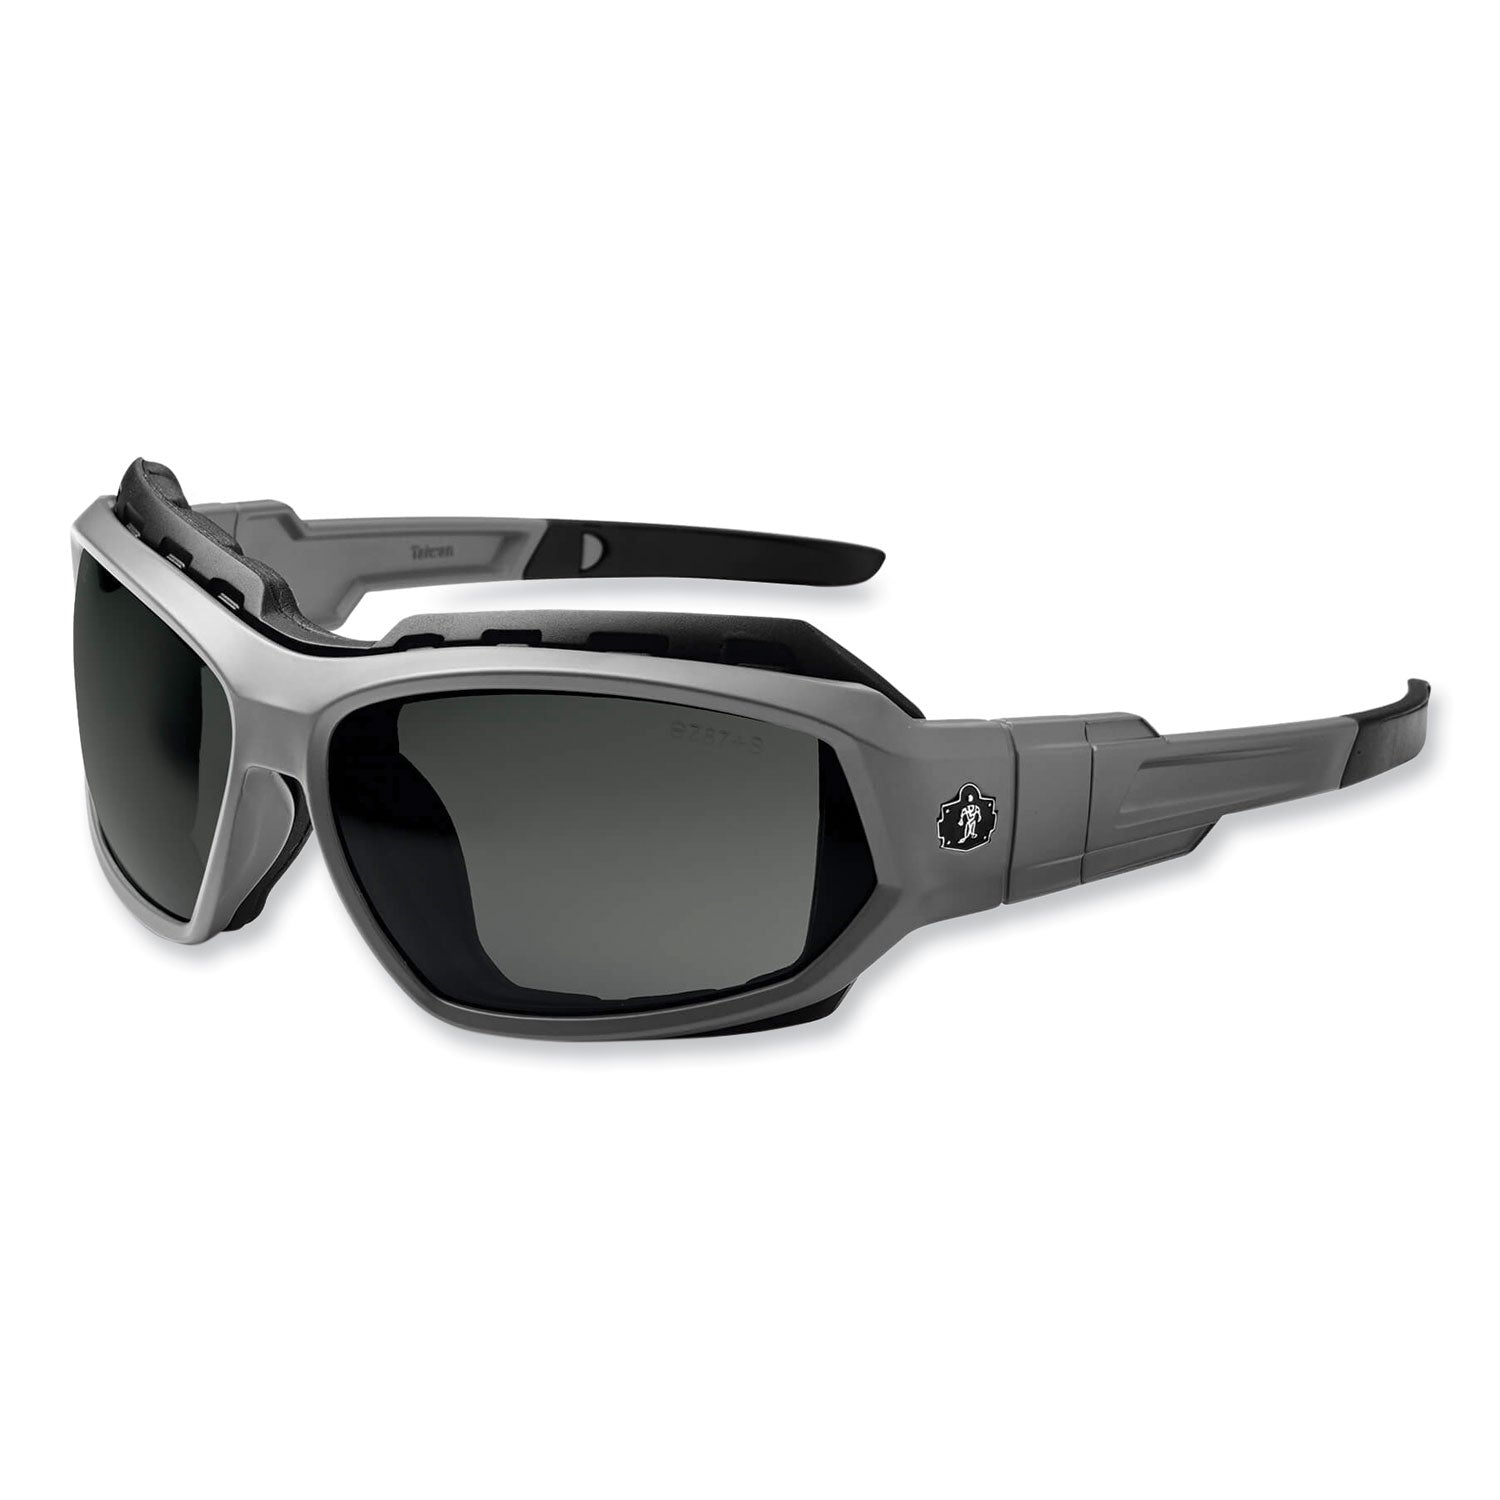 skullerz-loki-safety-glasses-goggles-matte-gray-nylon-impact-frame-polarized-smoke-polycarb-lensships-in-1-3-business-days_ego56131 - 4